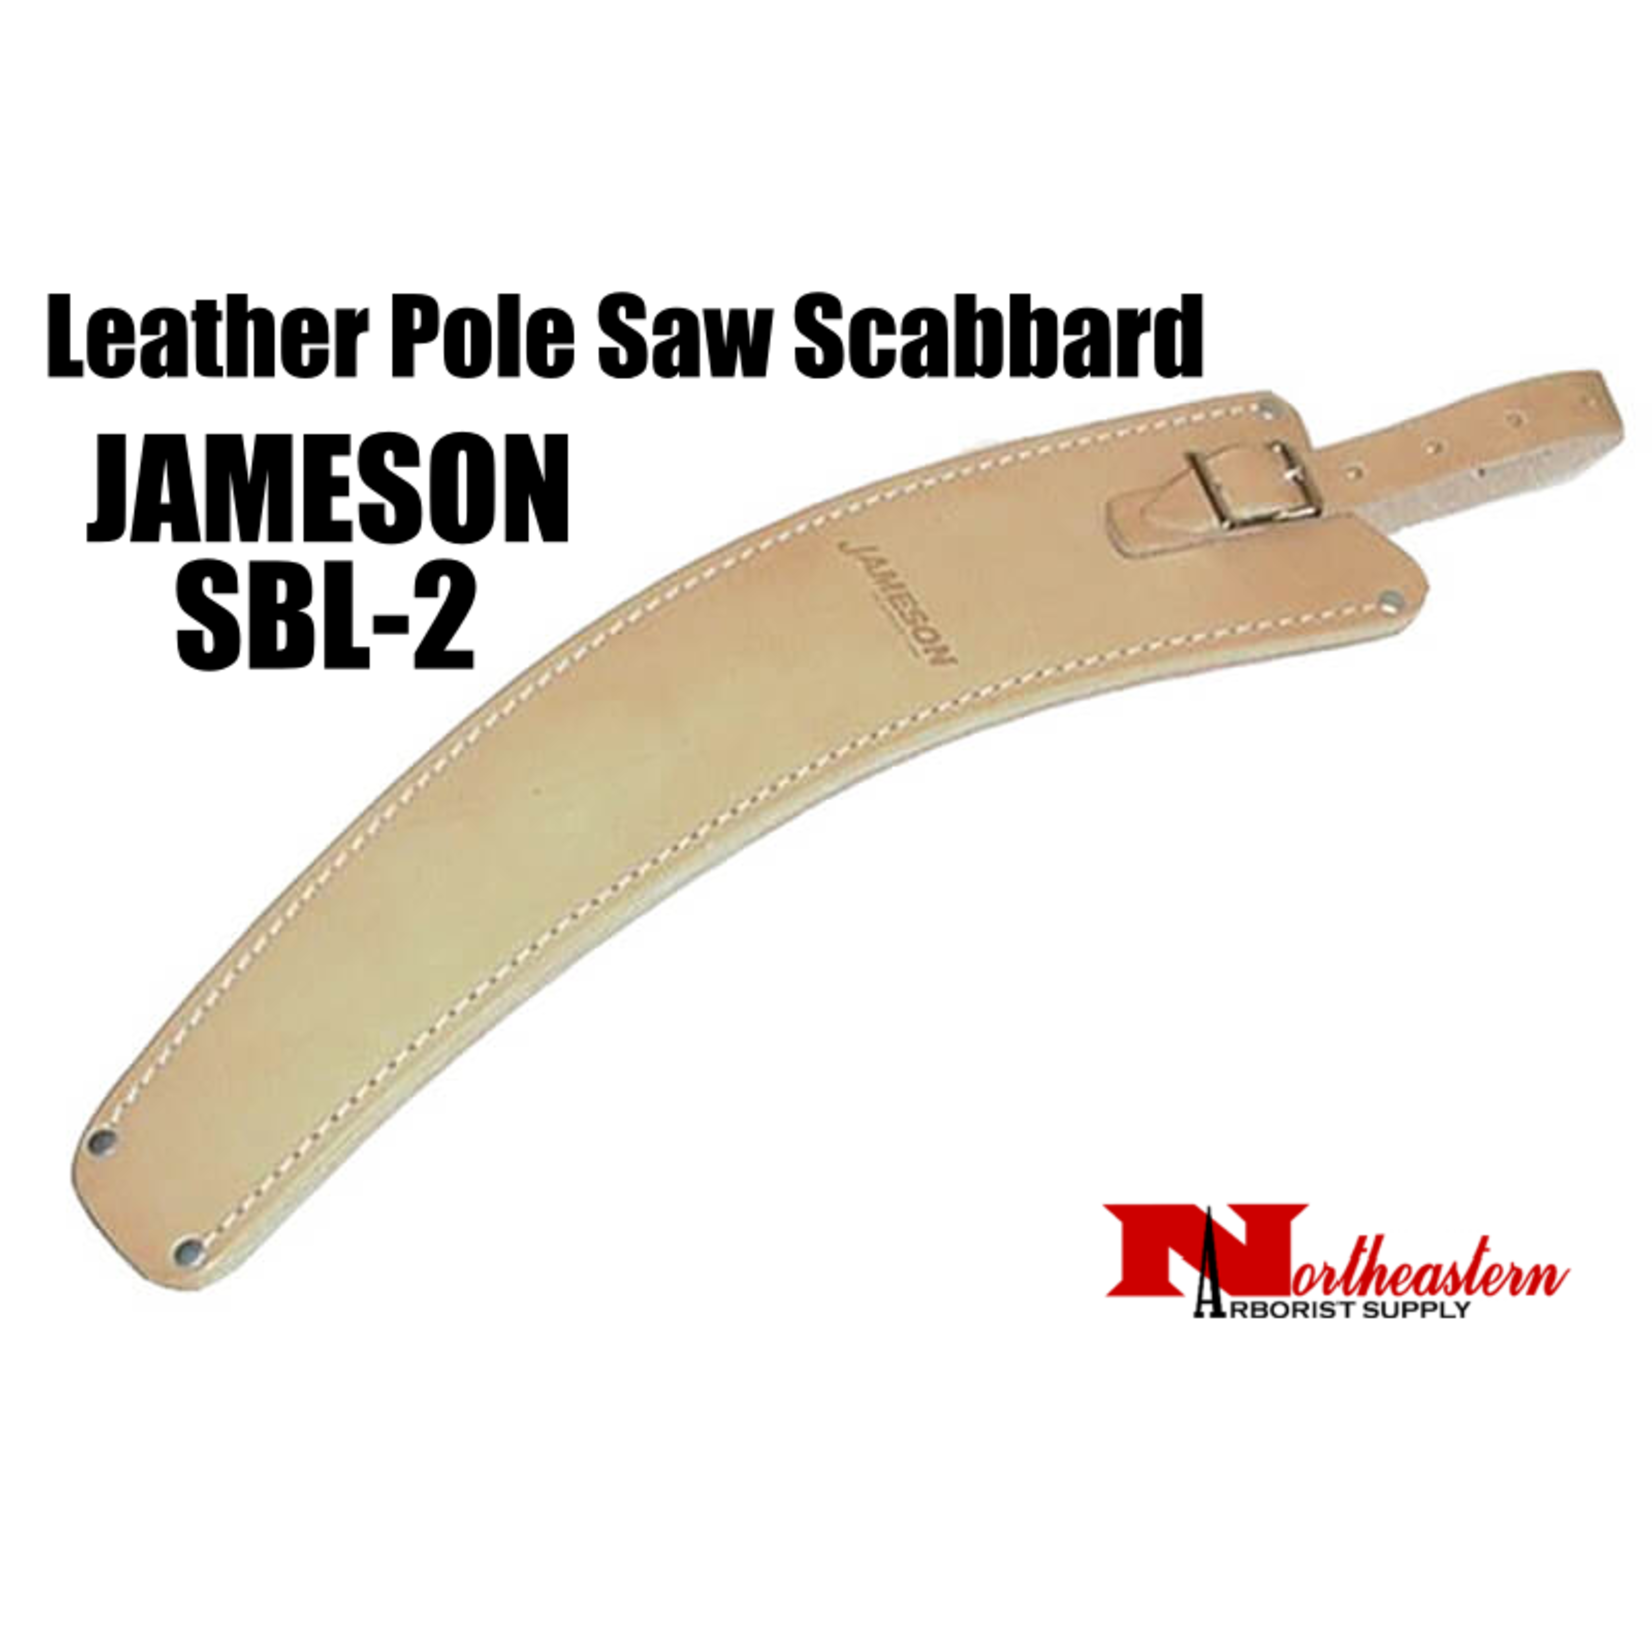 Jameson Sheath For Leather Pole Saw Blade